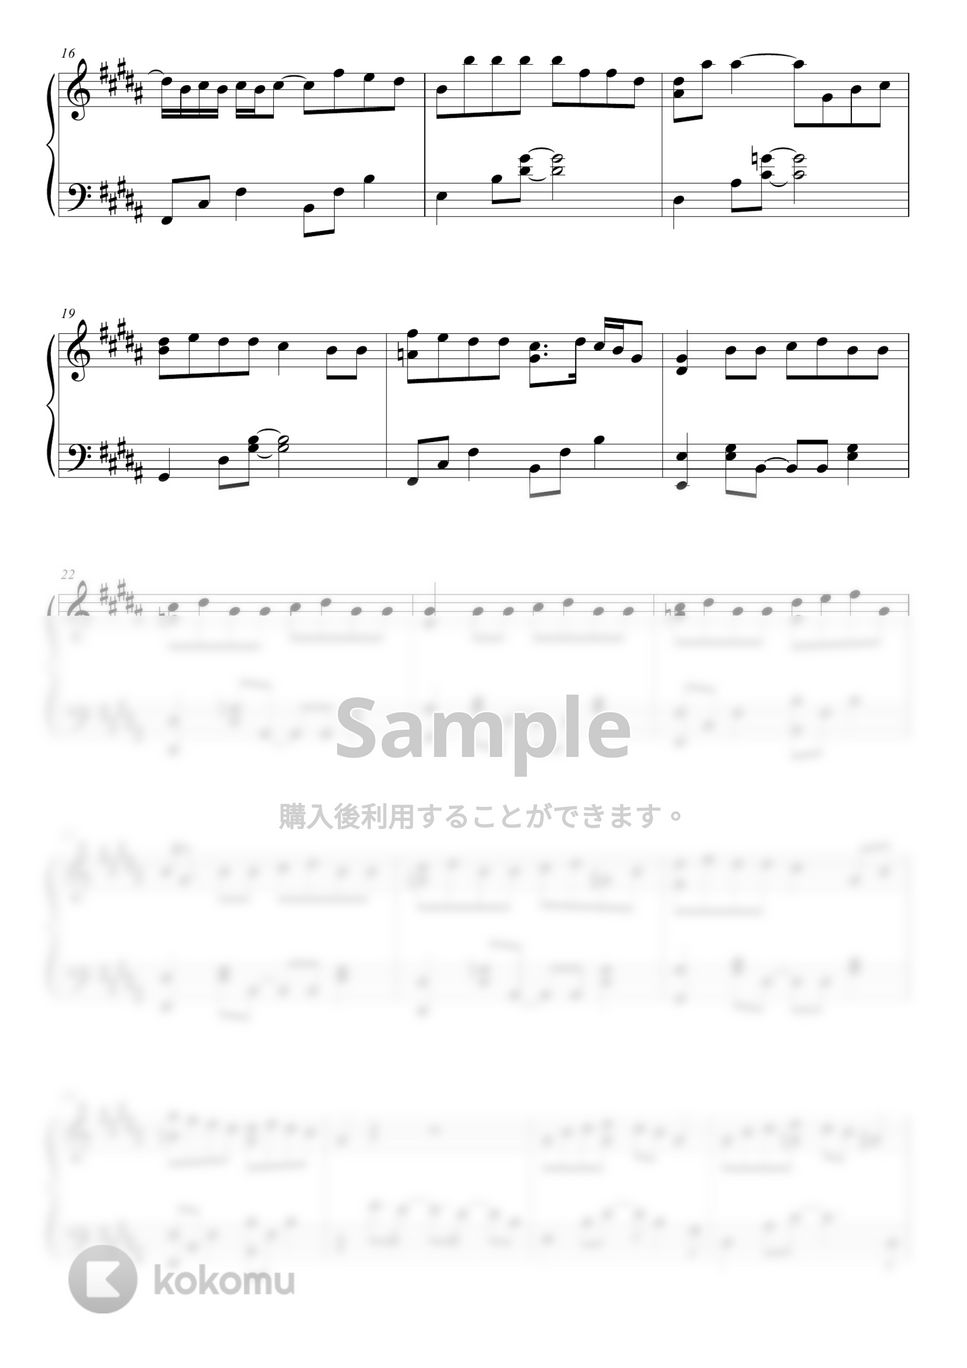 Jung Kook - Seven (PIANO COVER) by HANPPYEOMPIANO